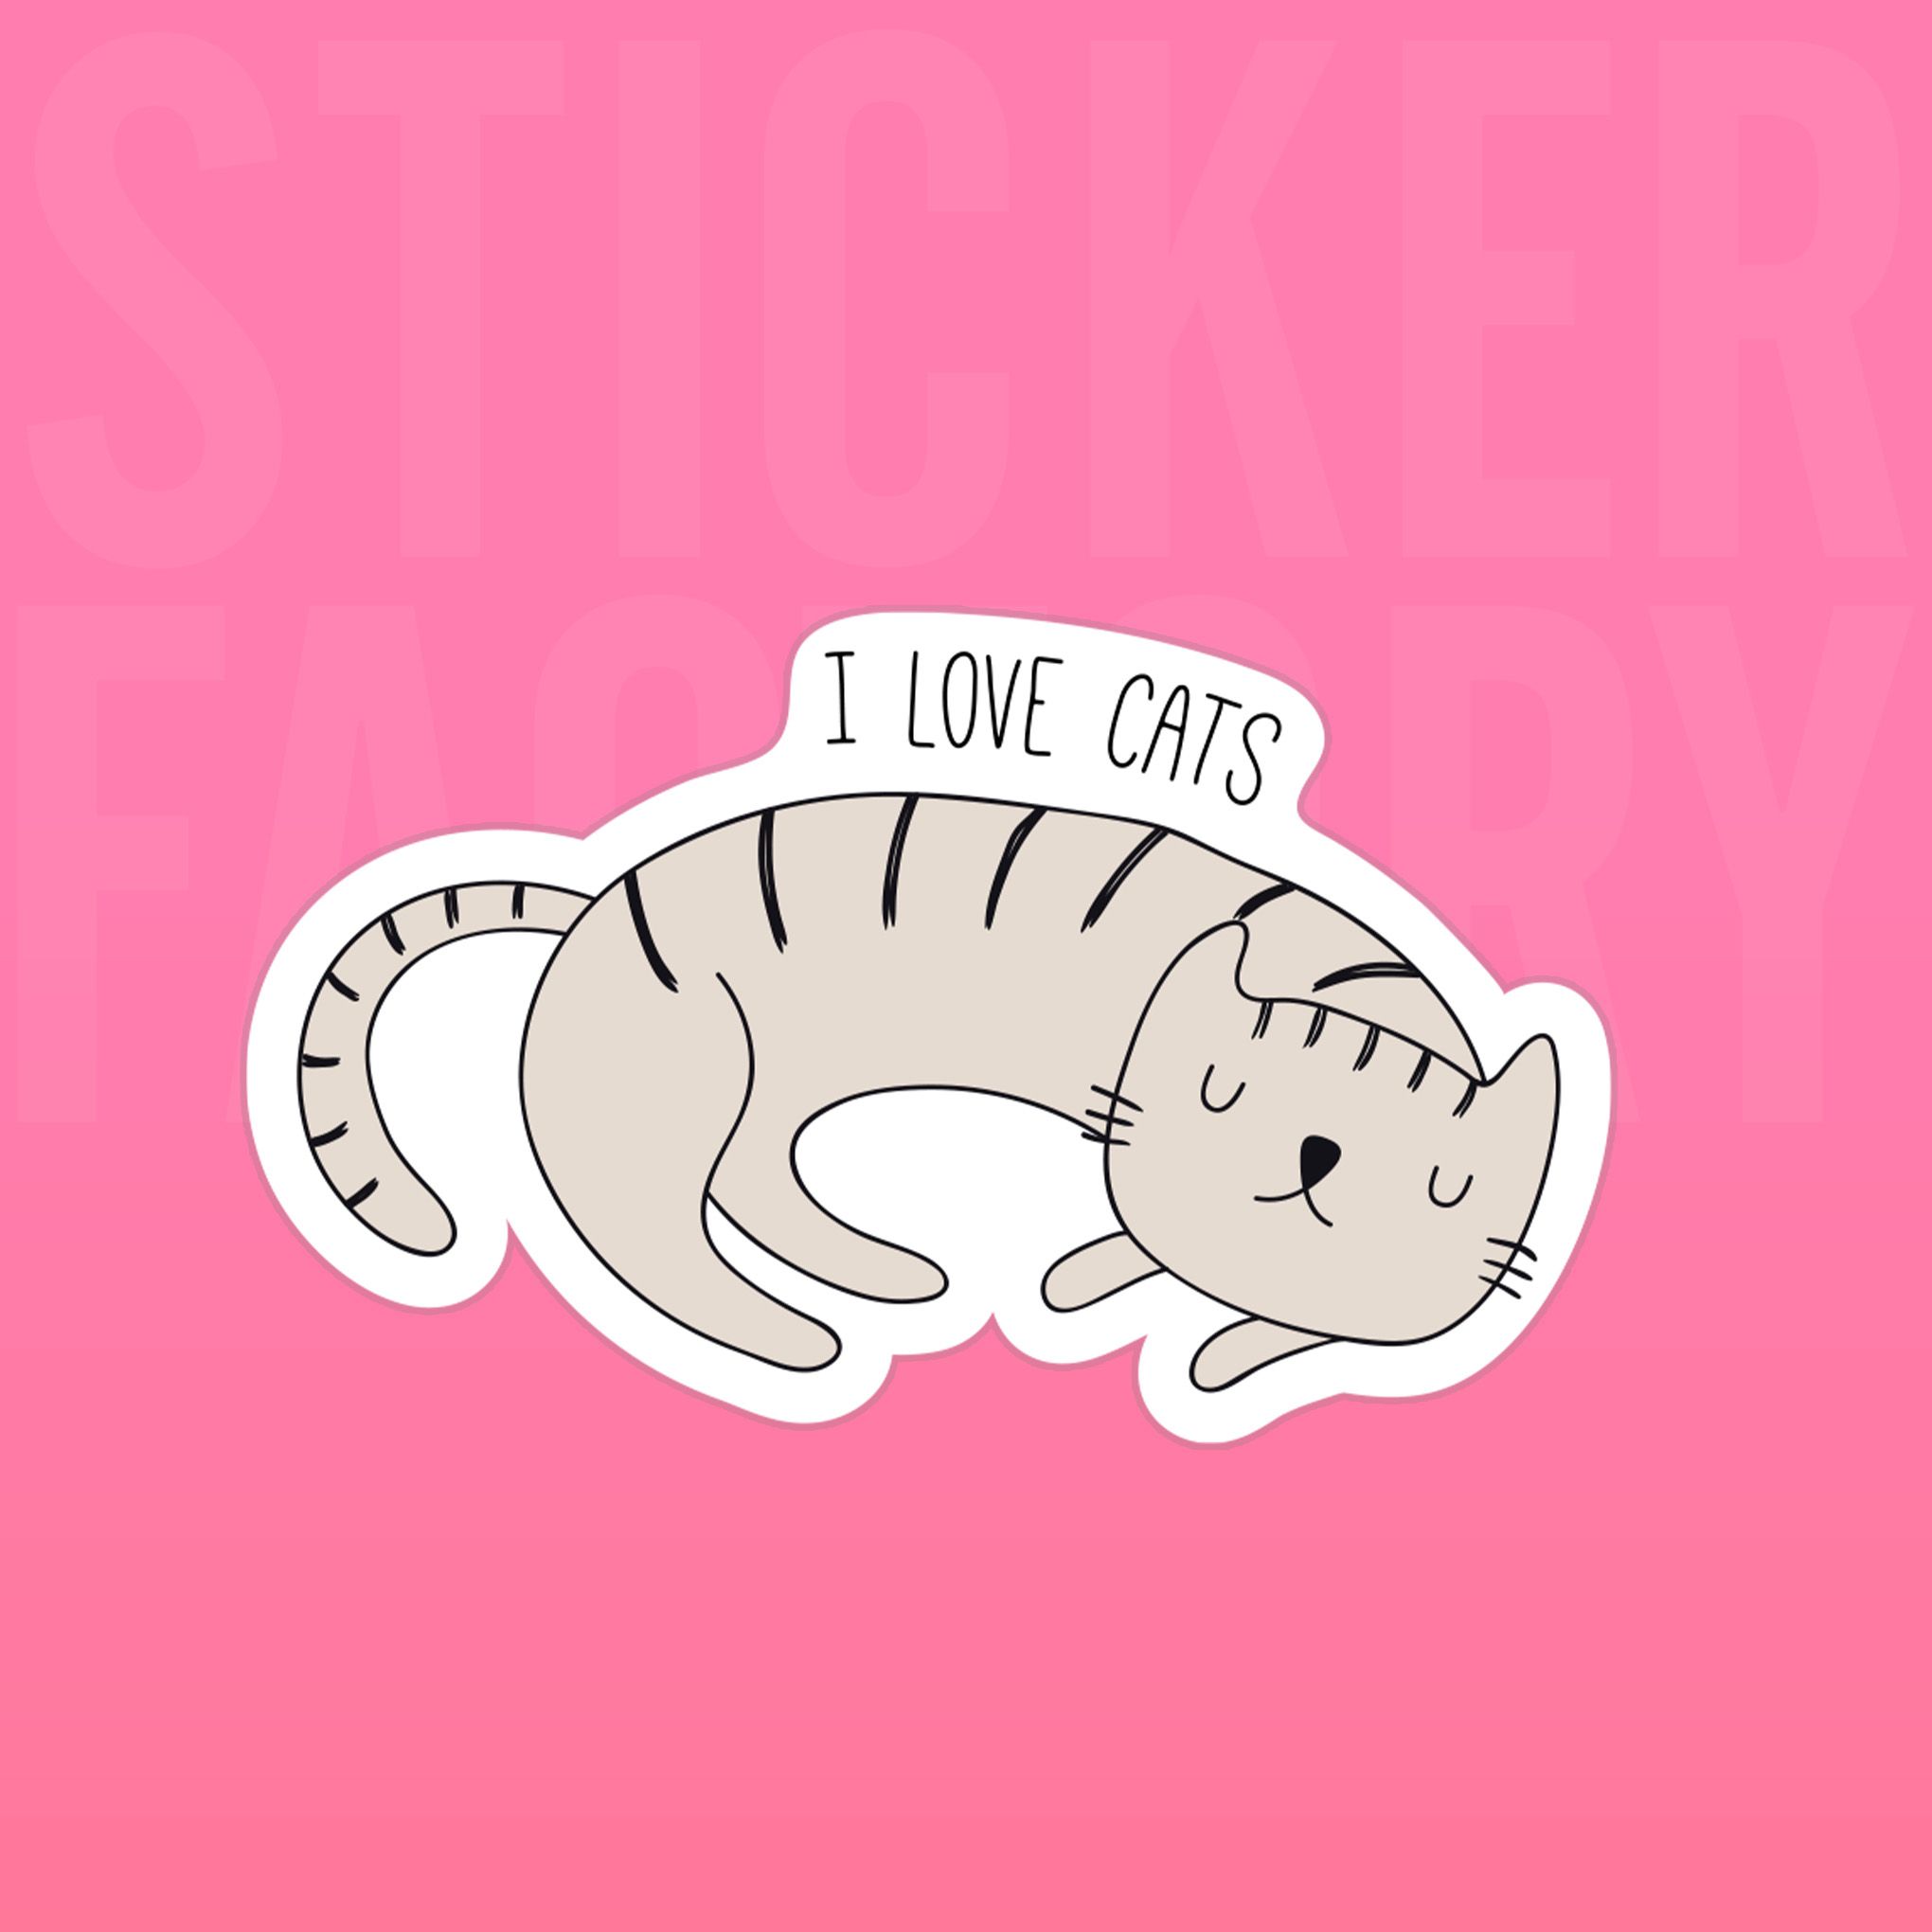 I LOVE CAT 7cm - Sticker Die-cut hình dán cắt rời